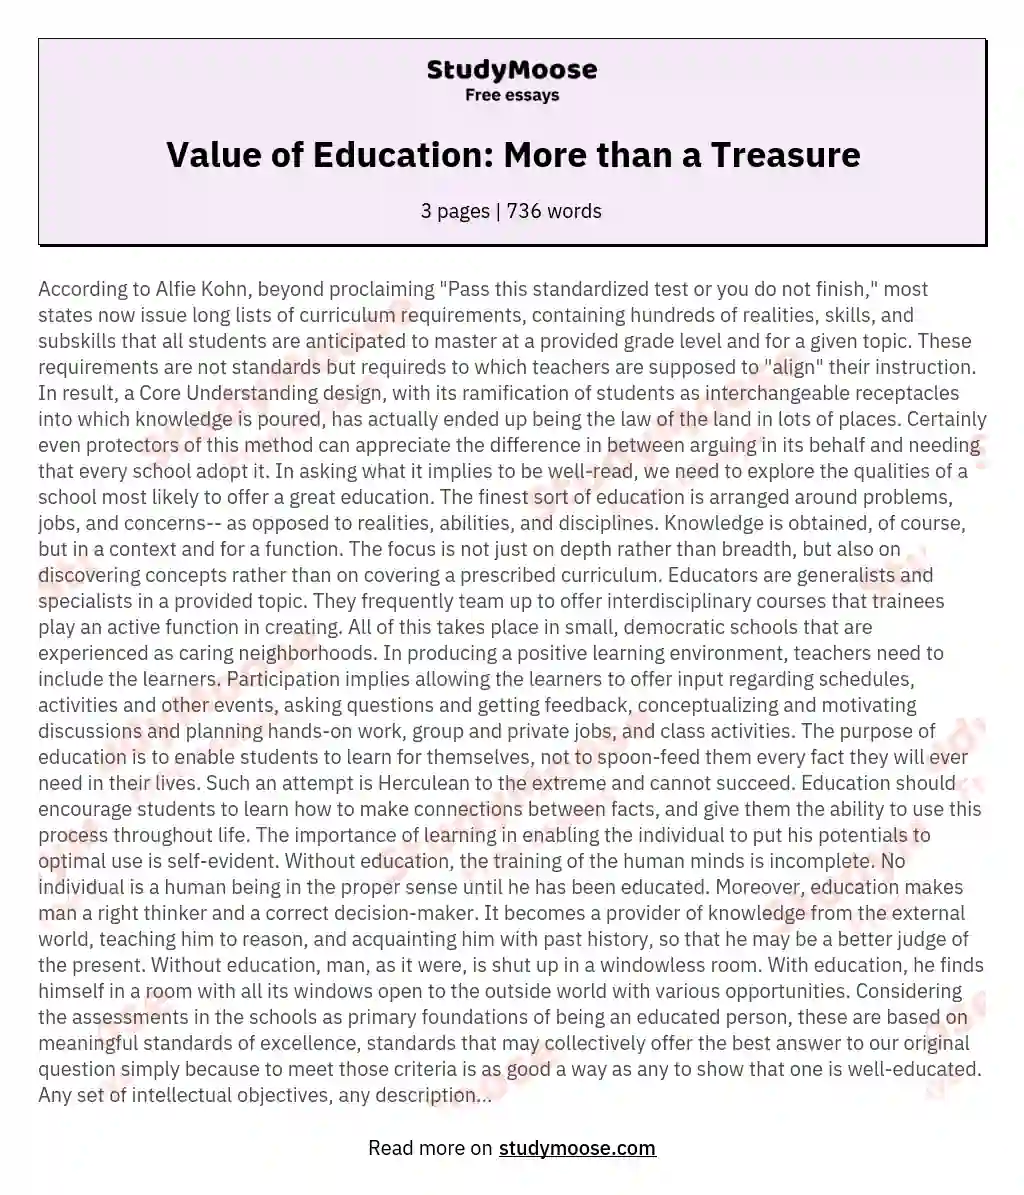 Value of Education: More than a Treasure